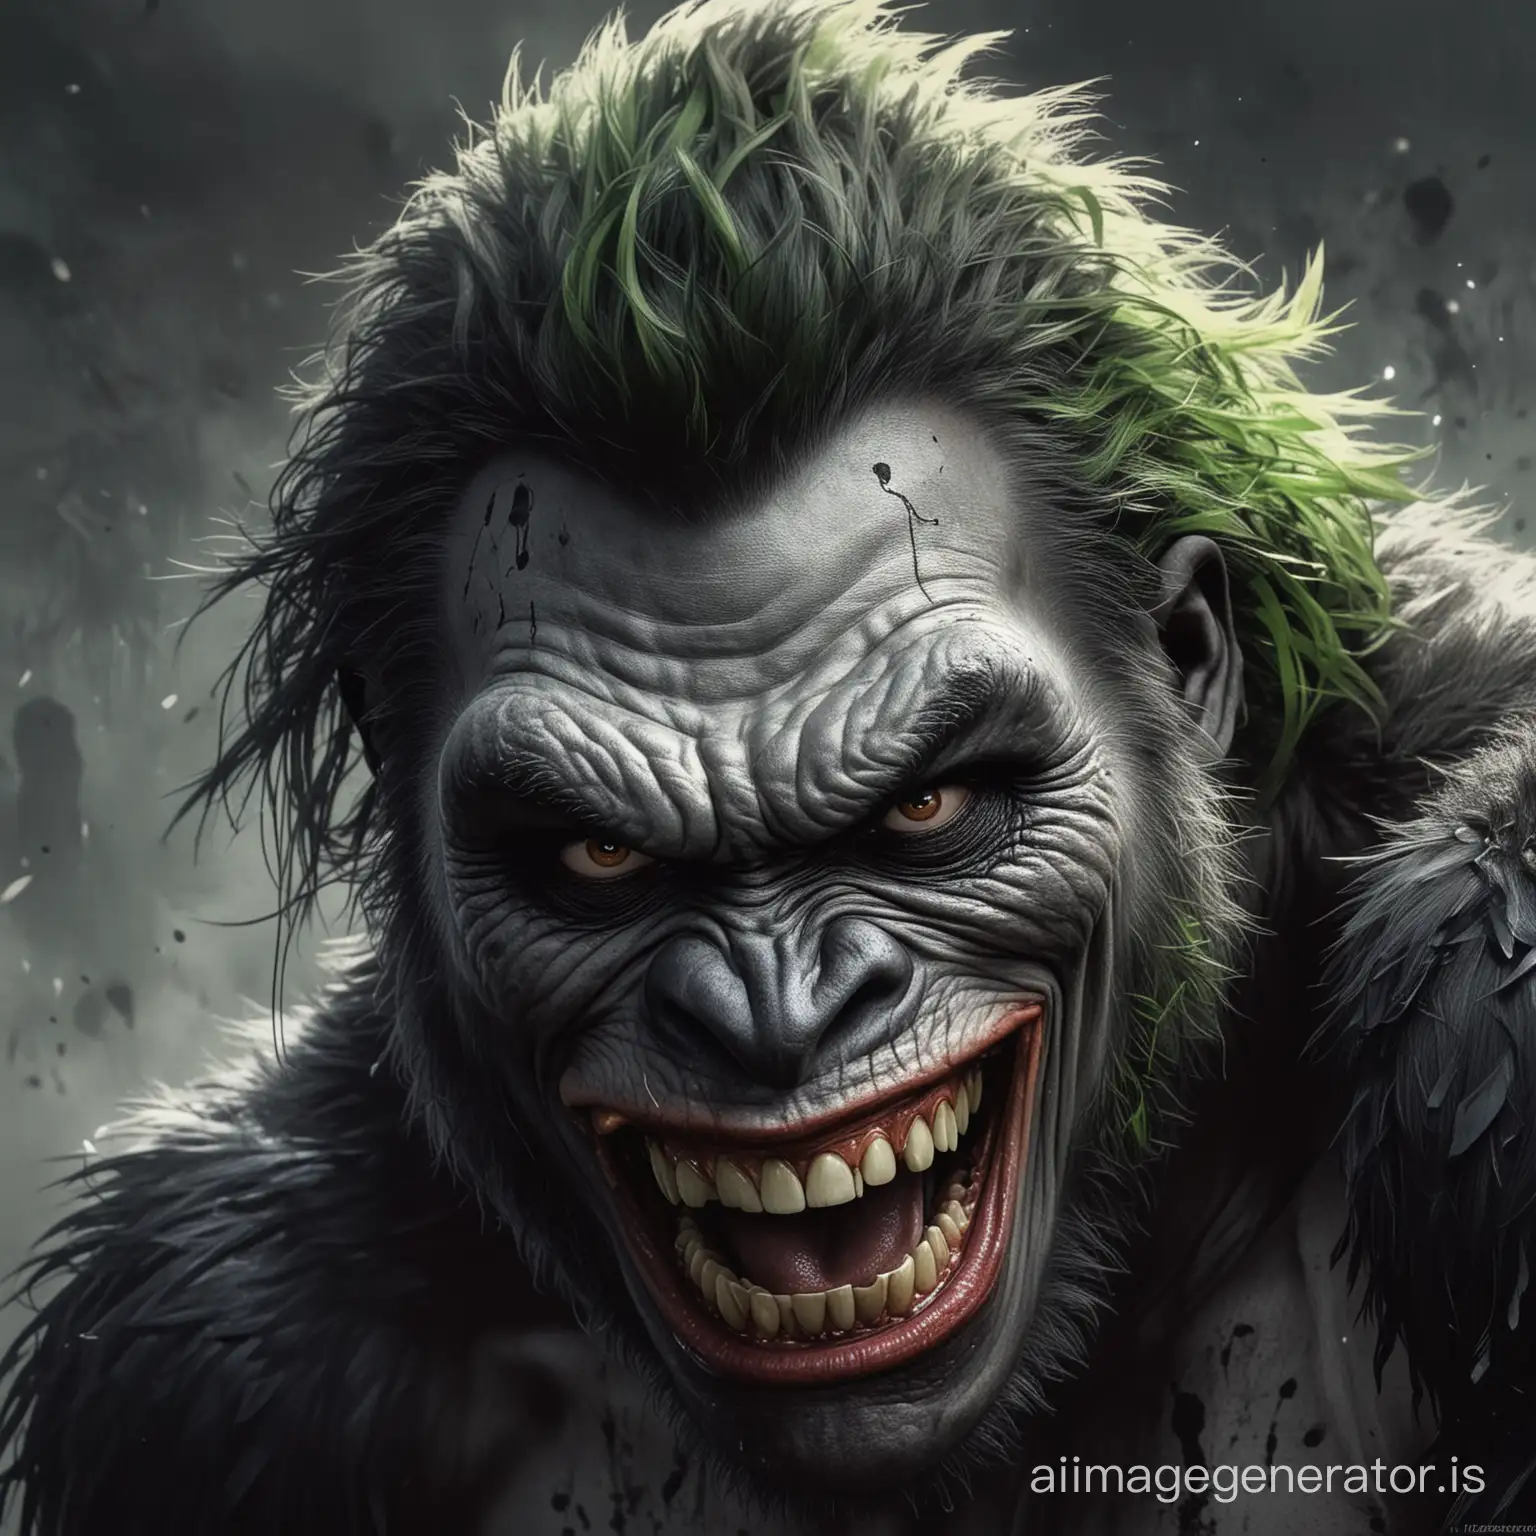 Gorilla-Joker-A-Hilarious-Comic-Book-Character